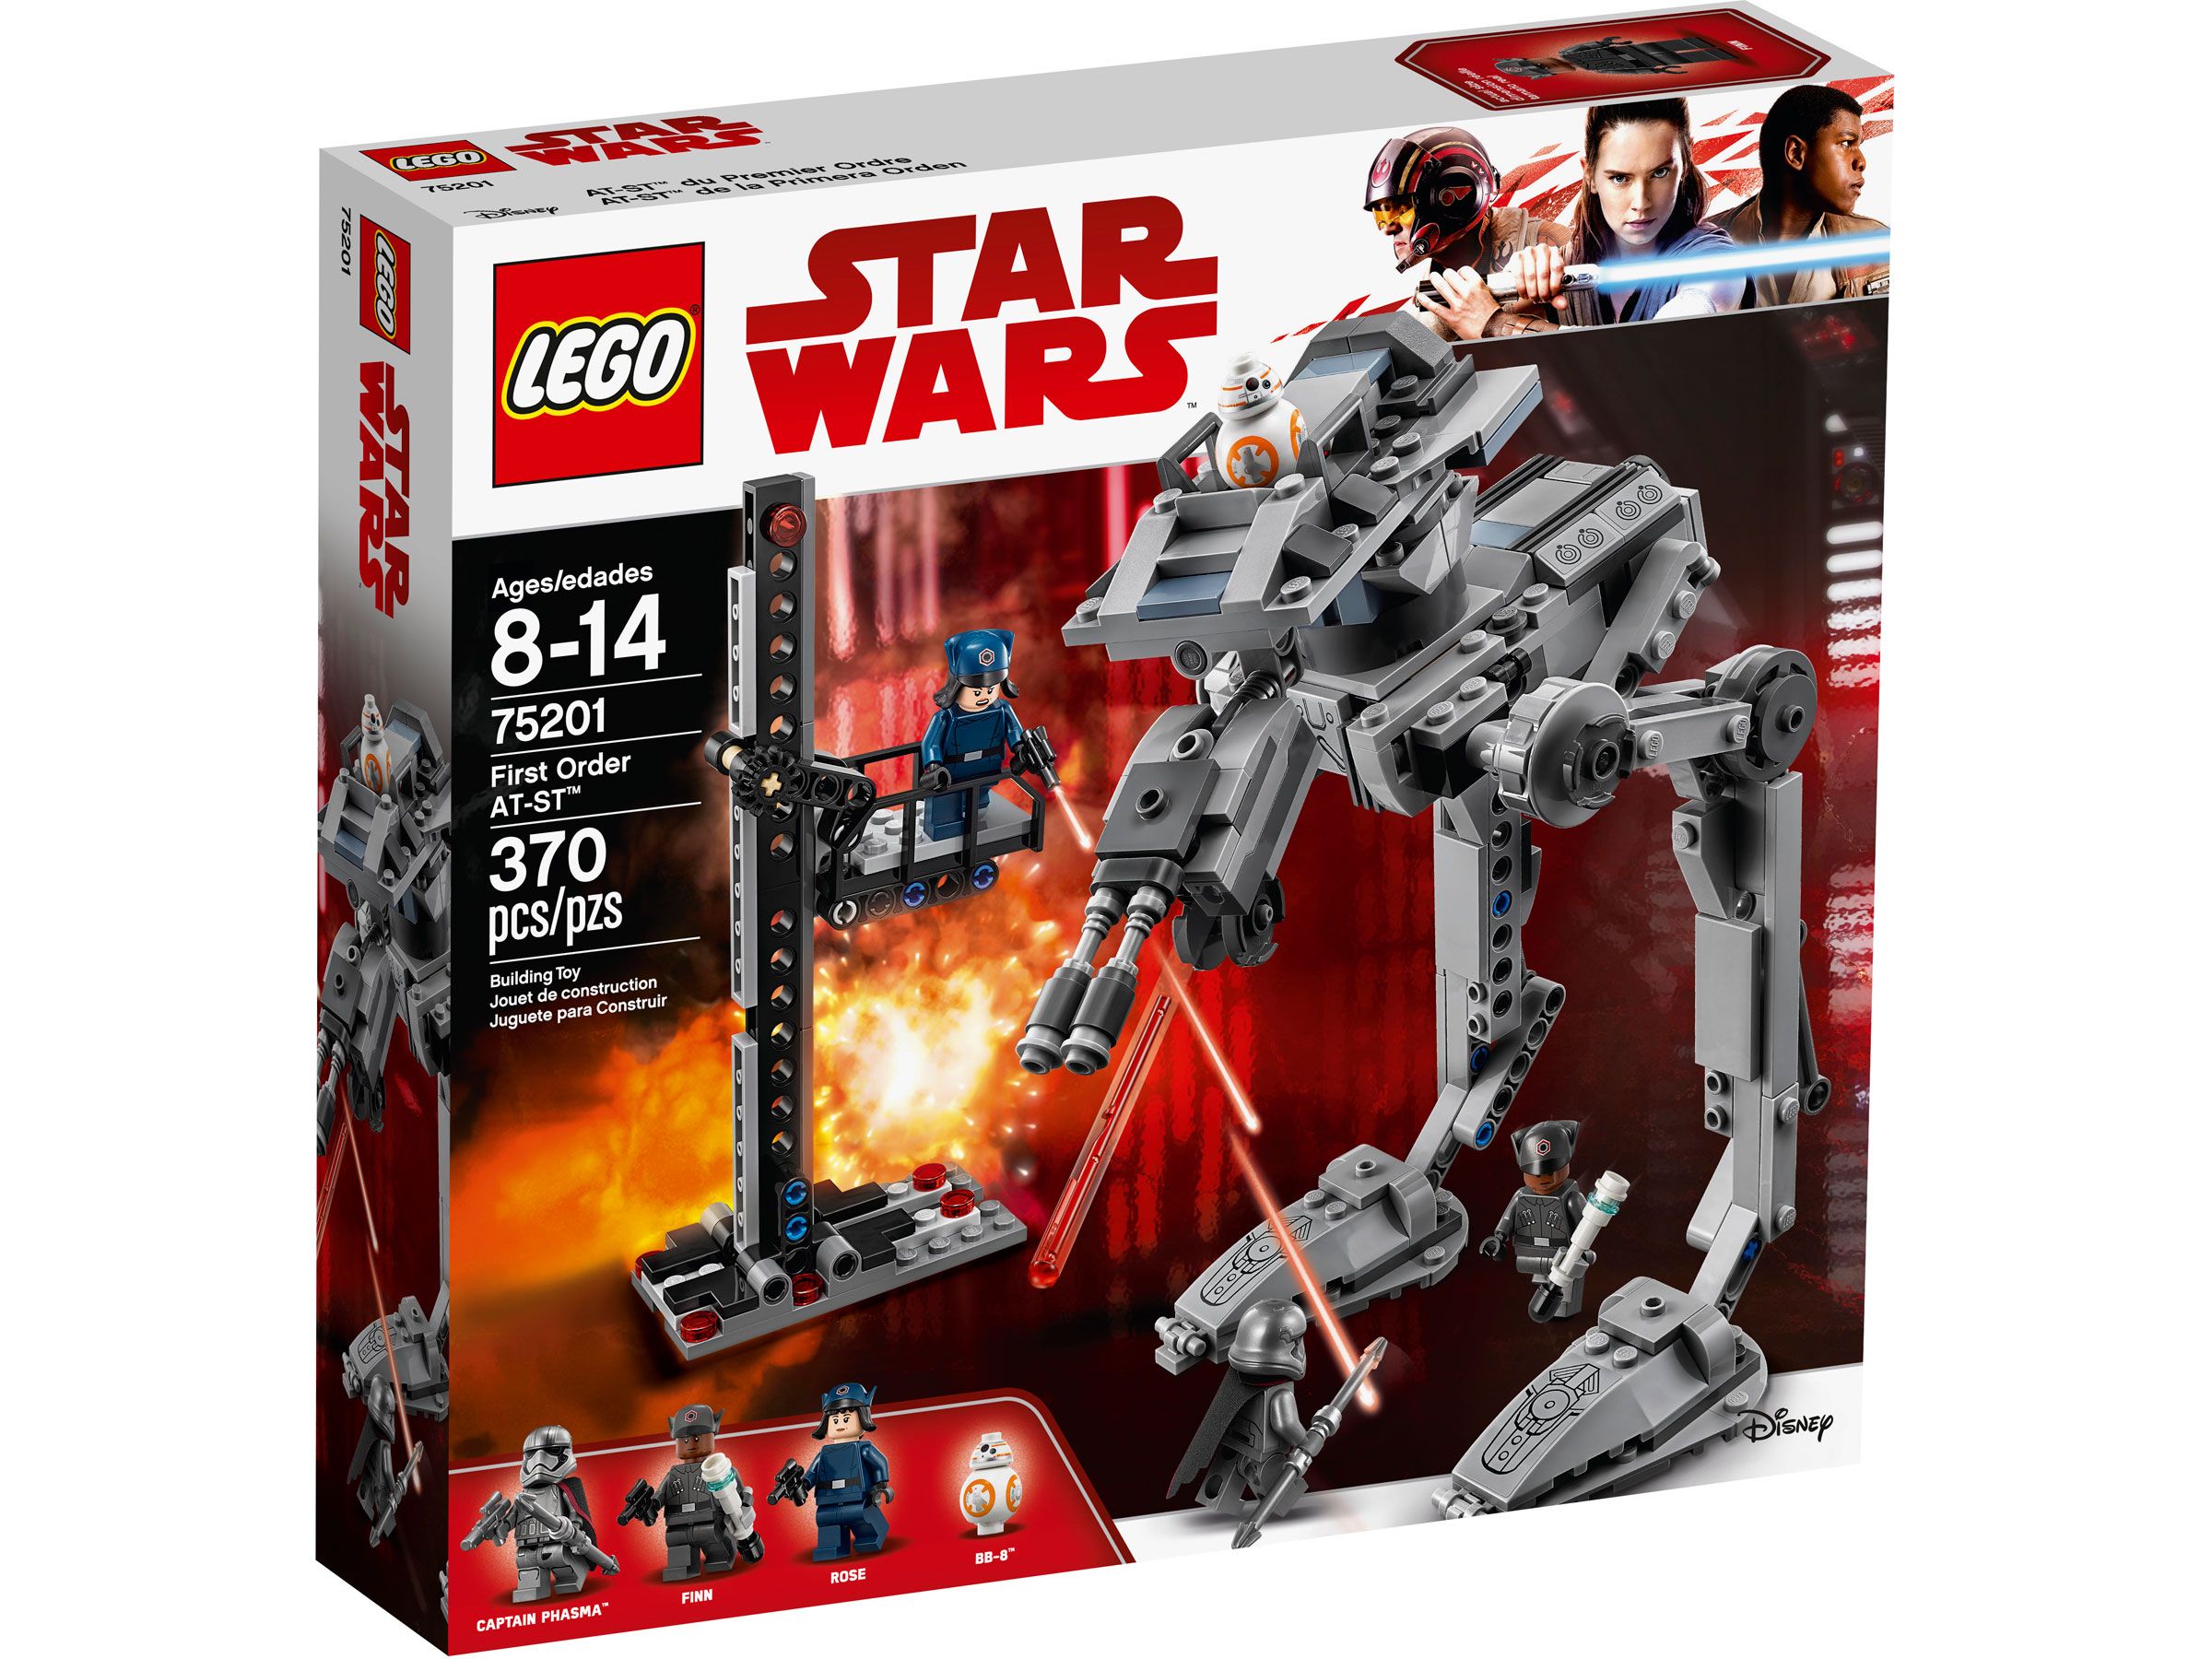 LEGO Star Wars 75201 First Order AT-ST™ LEGO_75201_Box1_v39.jpg